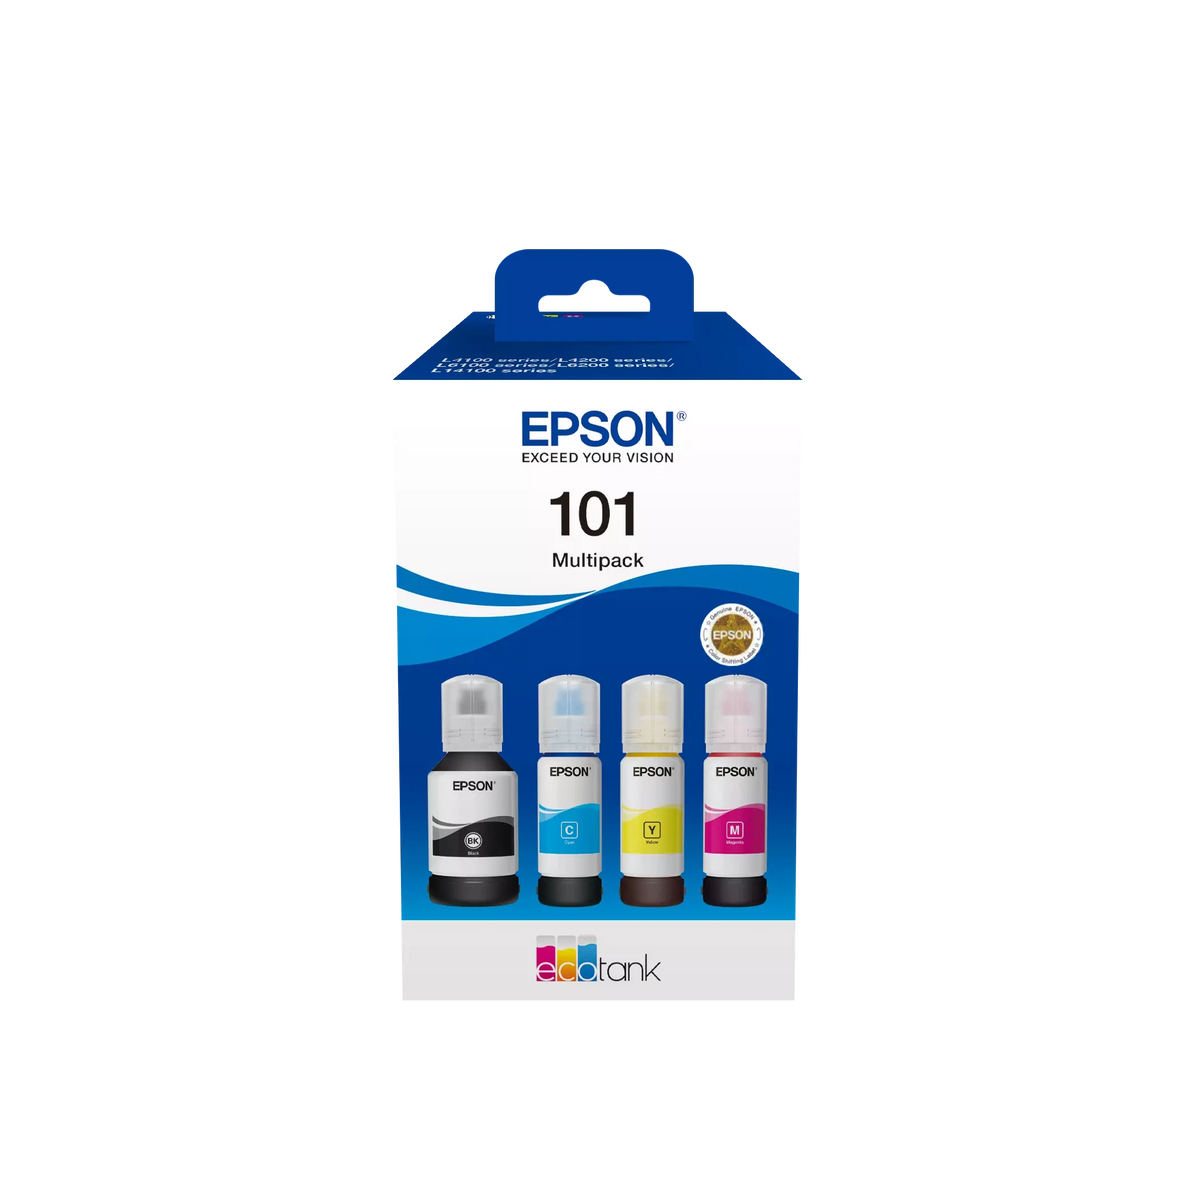 EPSON 101 EcoTank Multicolored ink bottle (Pack of 4)